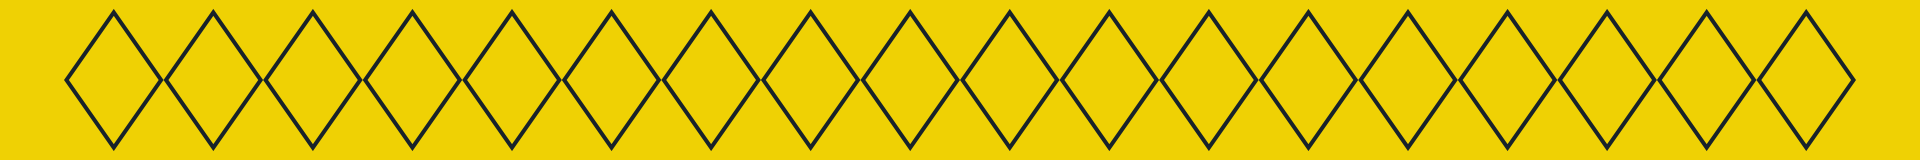 bg-section-yellow